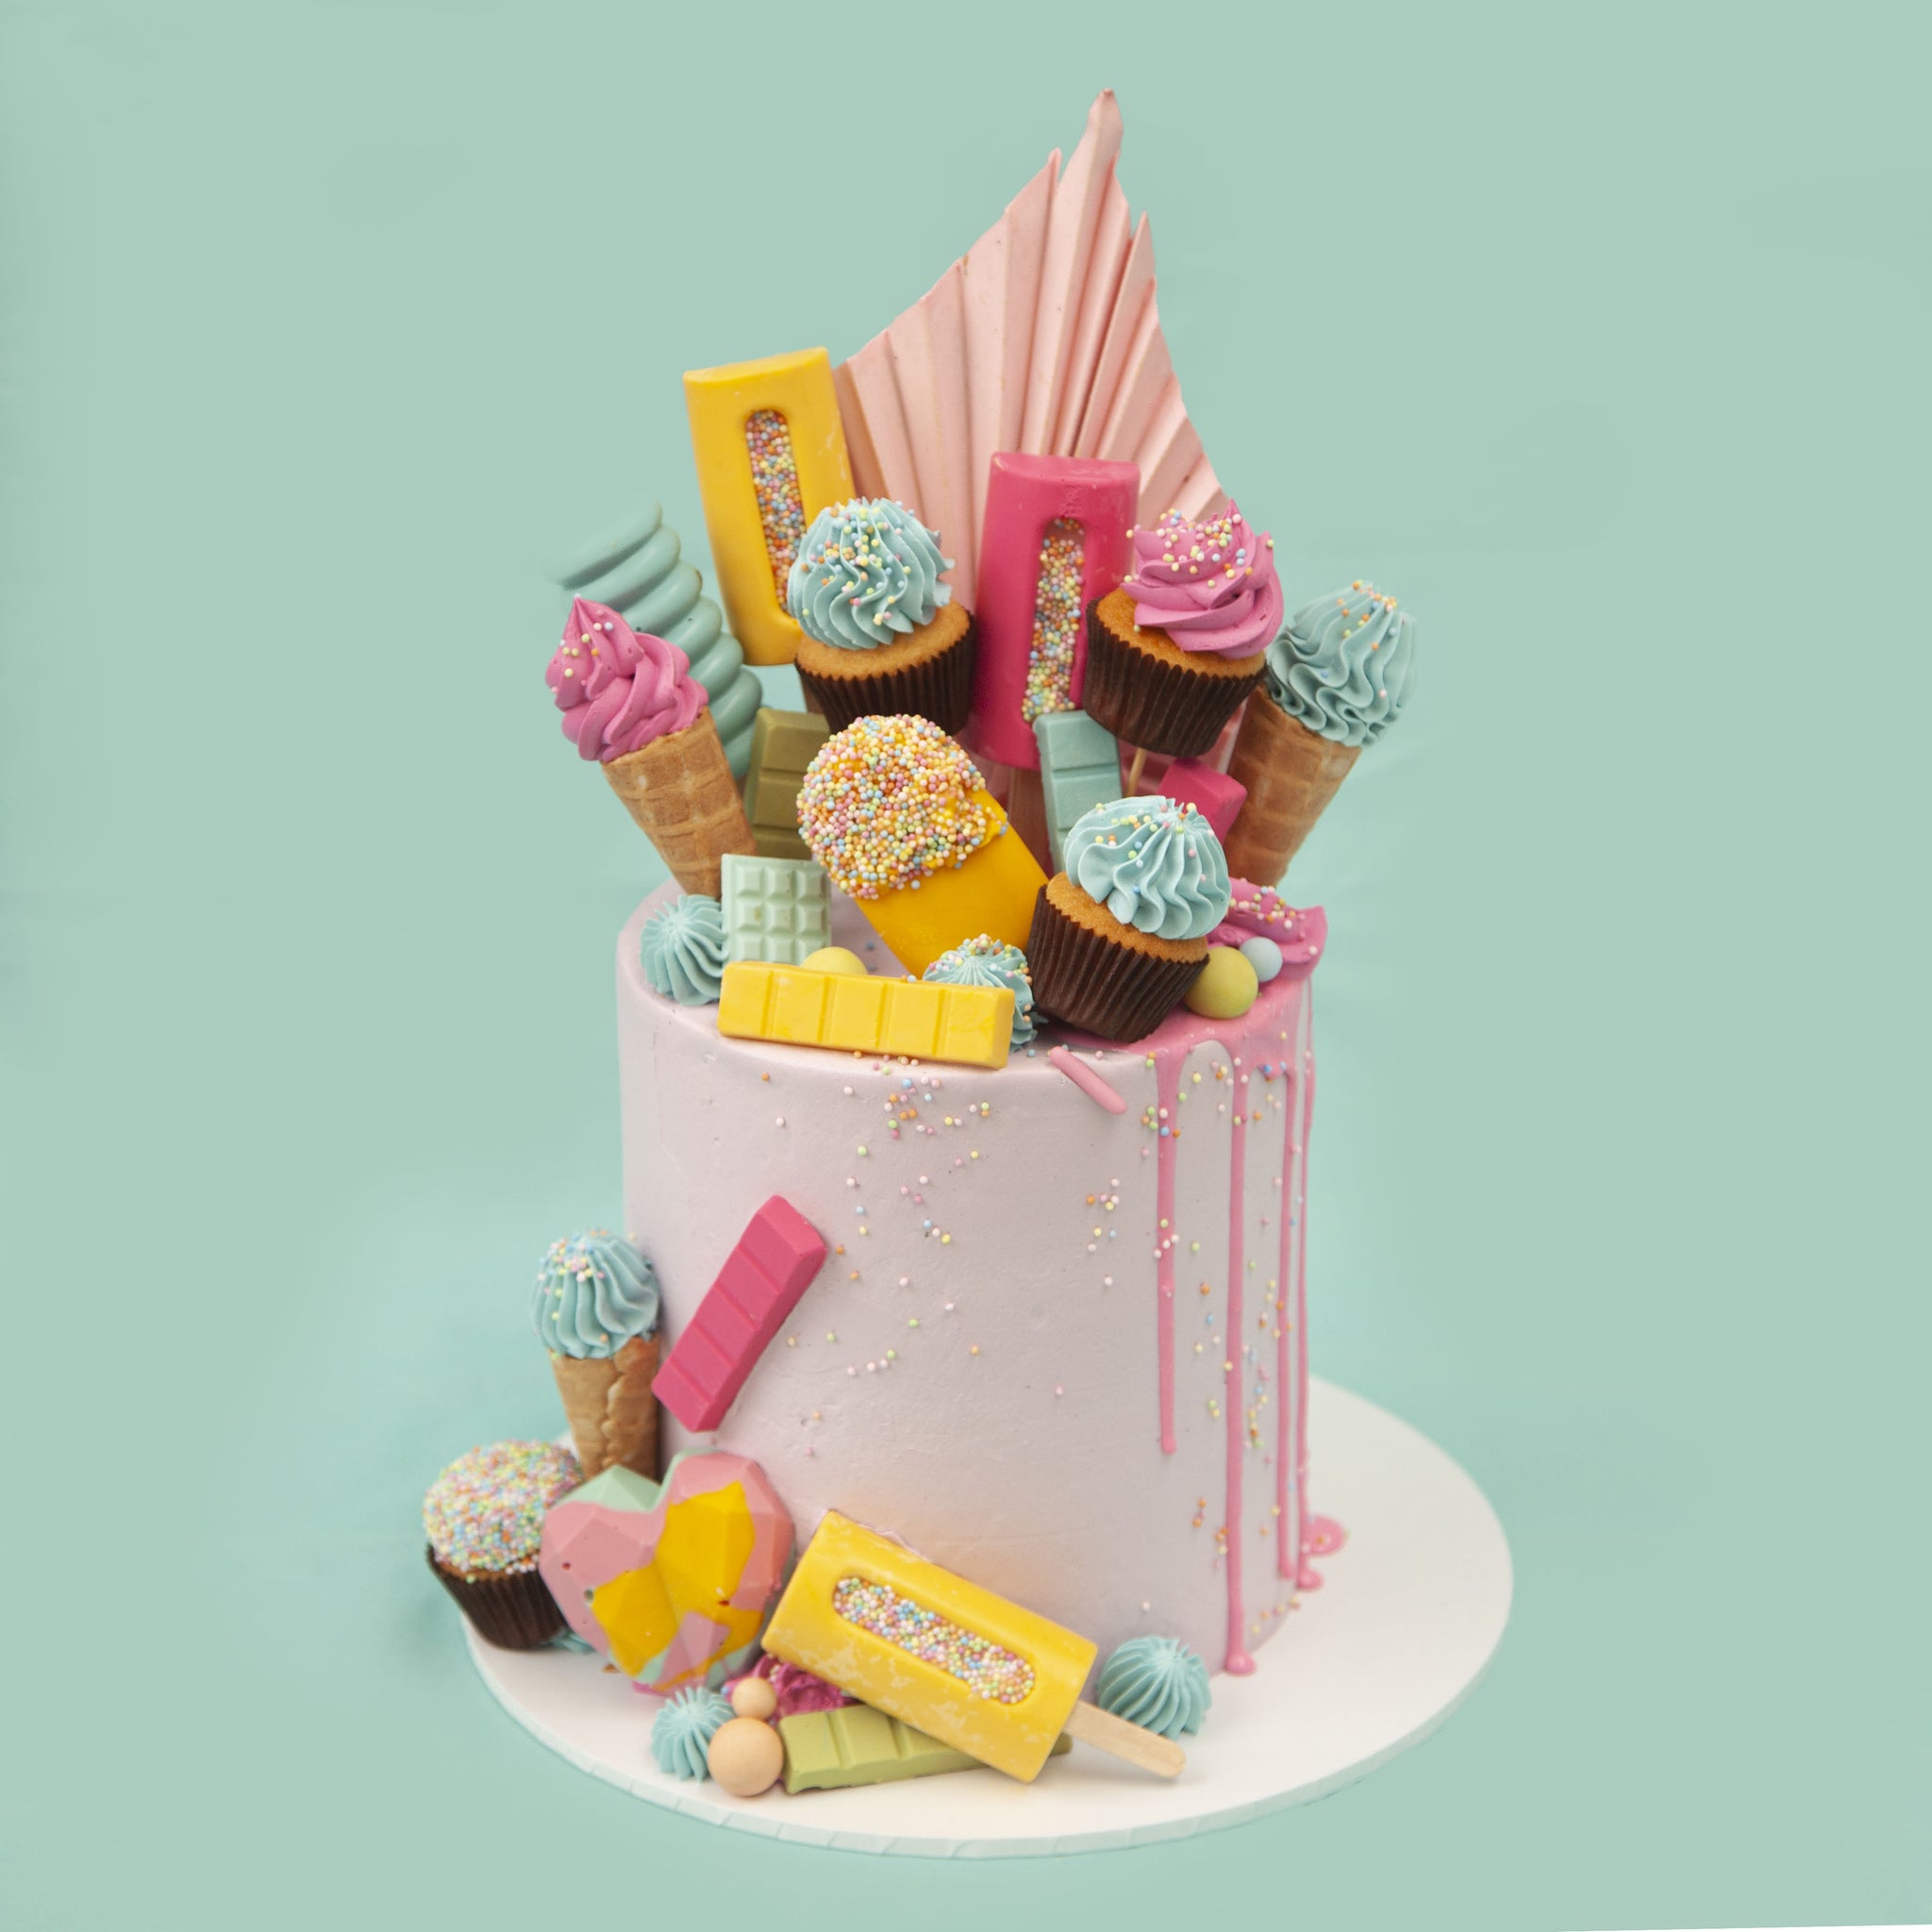 Bespoke Cakes | Perfect Luxury Wedding & Birthday Cakes | Jack and Beyond